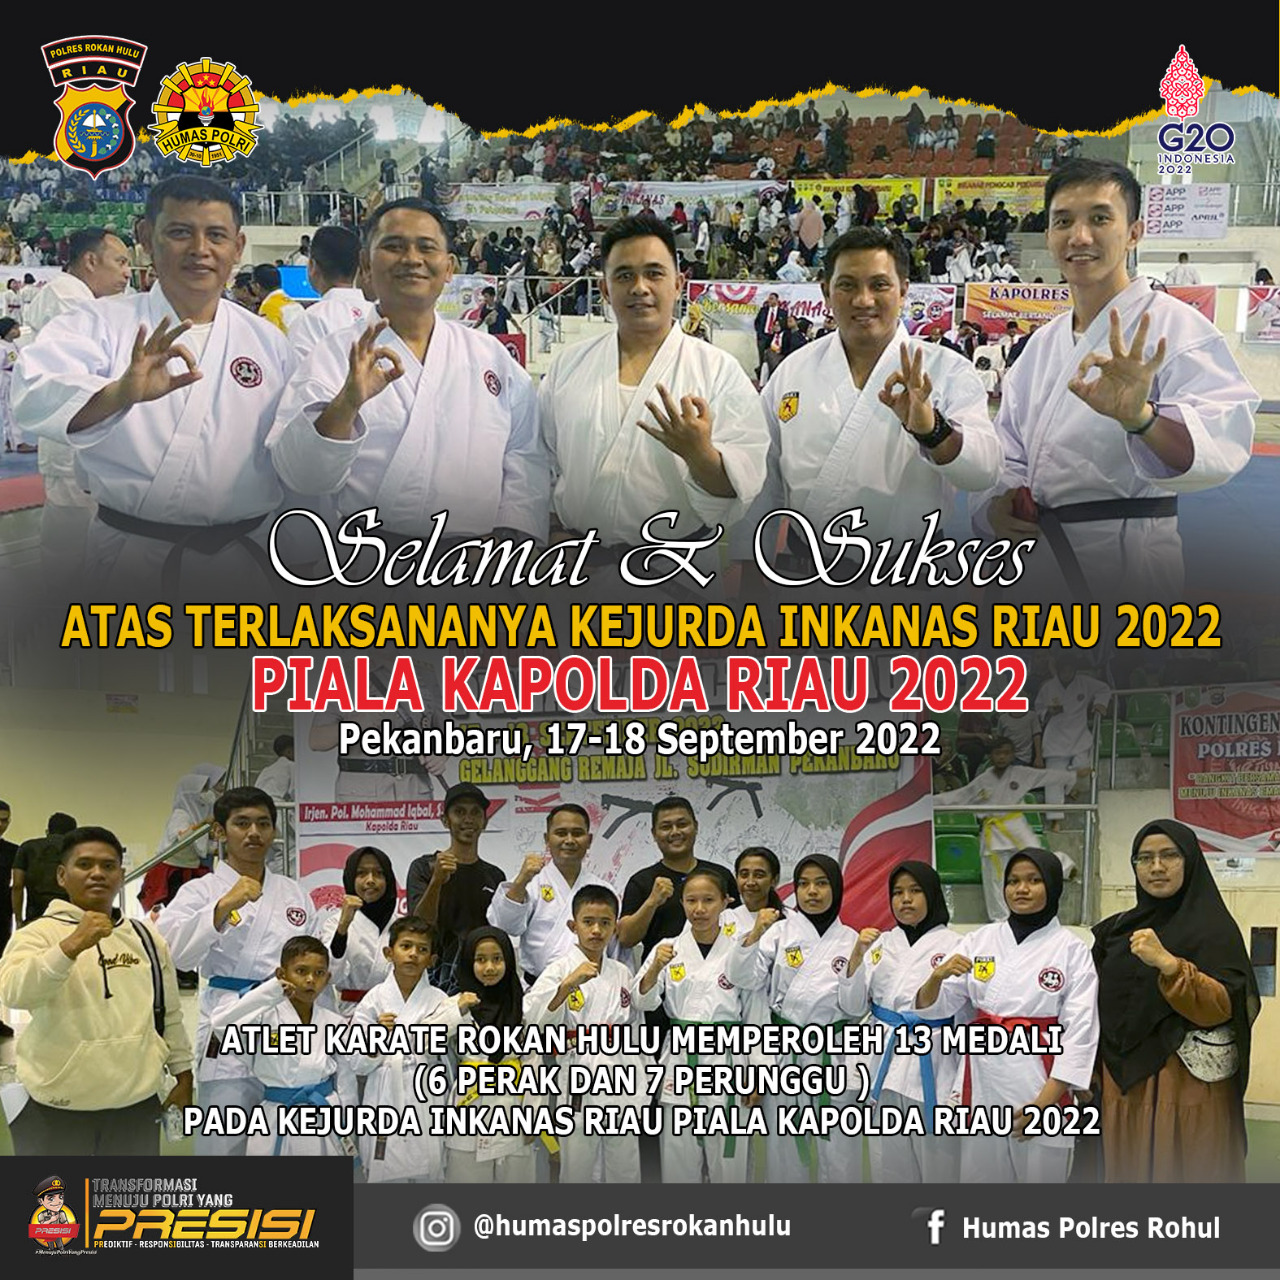 Polres Rohul Raih 6 Perak Dan  7 Perunggu Pada Ajang Kejurda  Piala Kapolda Riau Inkanas 2022   